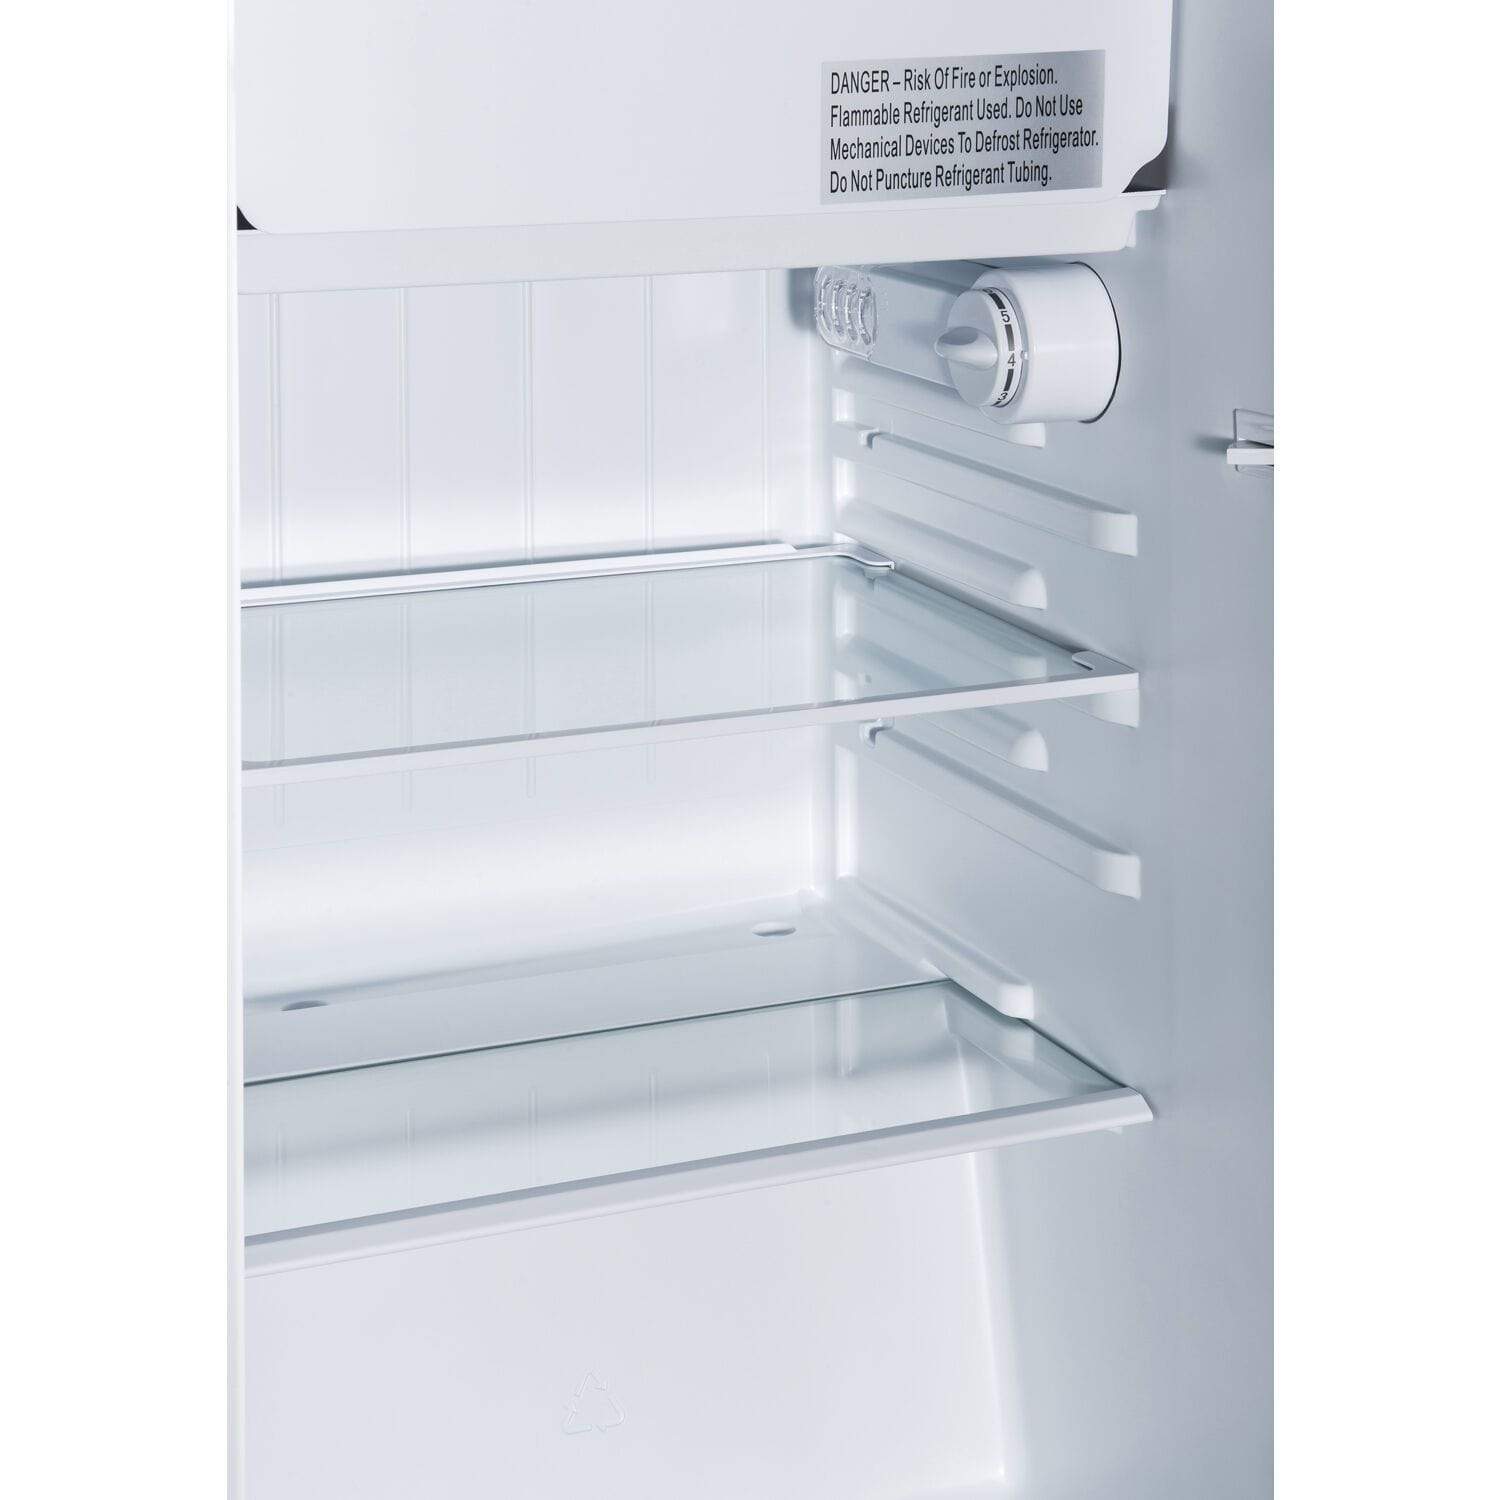 Amana Compact Amana - 3.5 CF Compact Refrigerator, Freezer Compartment